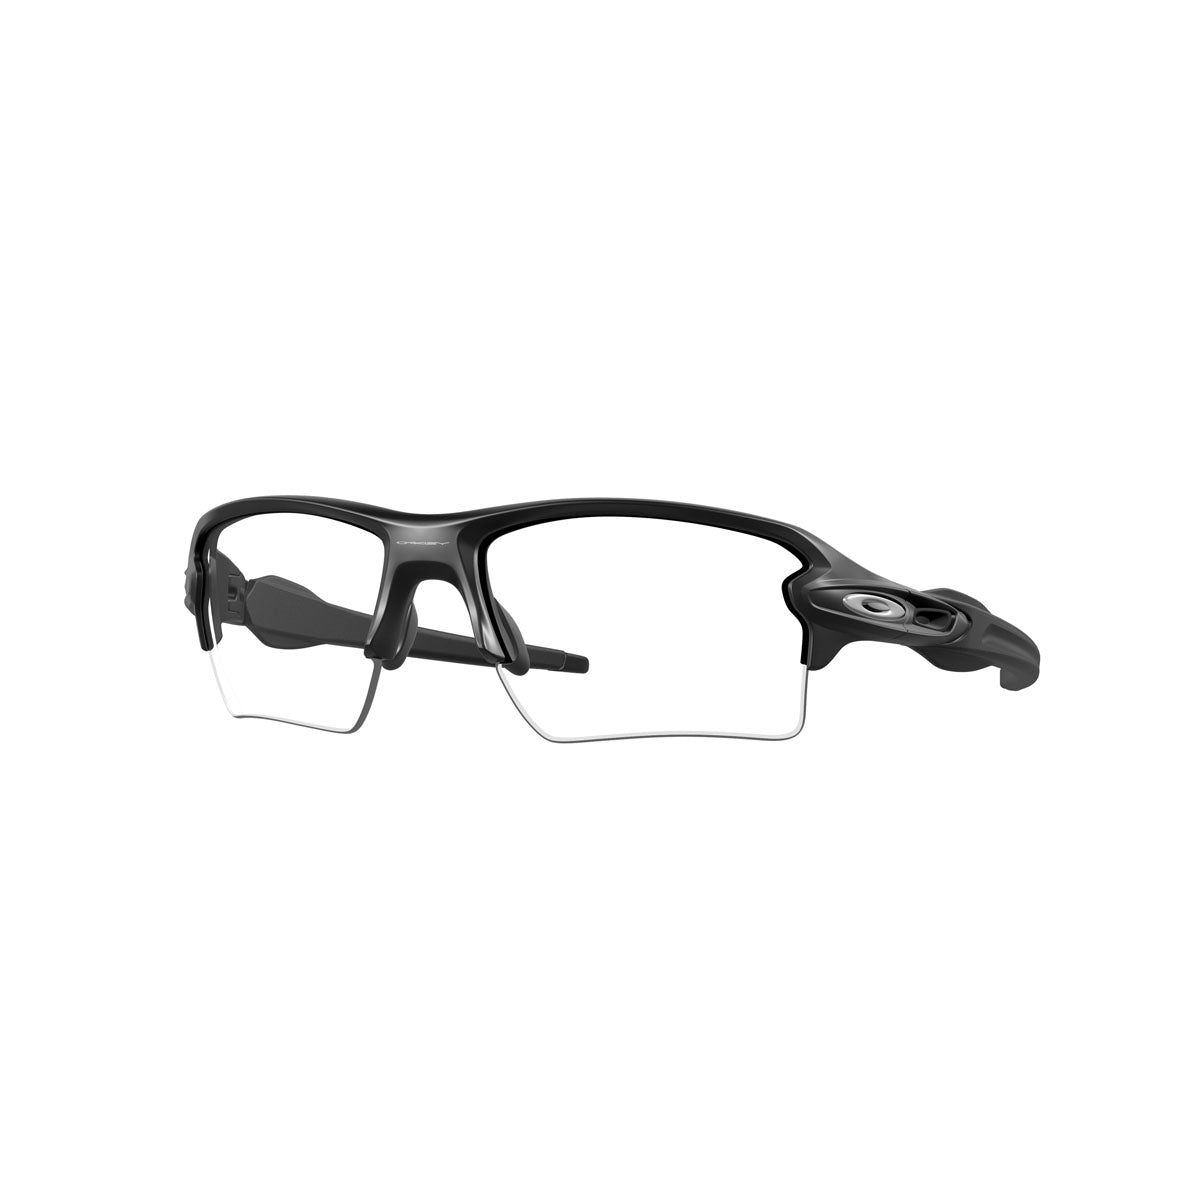 Oakley Flak 2.0 XL Sunglasses - Matte Black/Clear